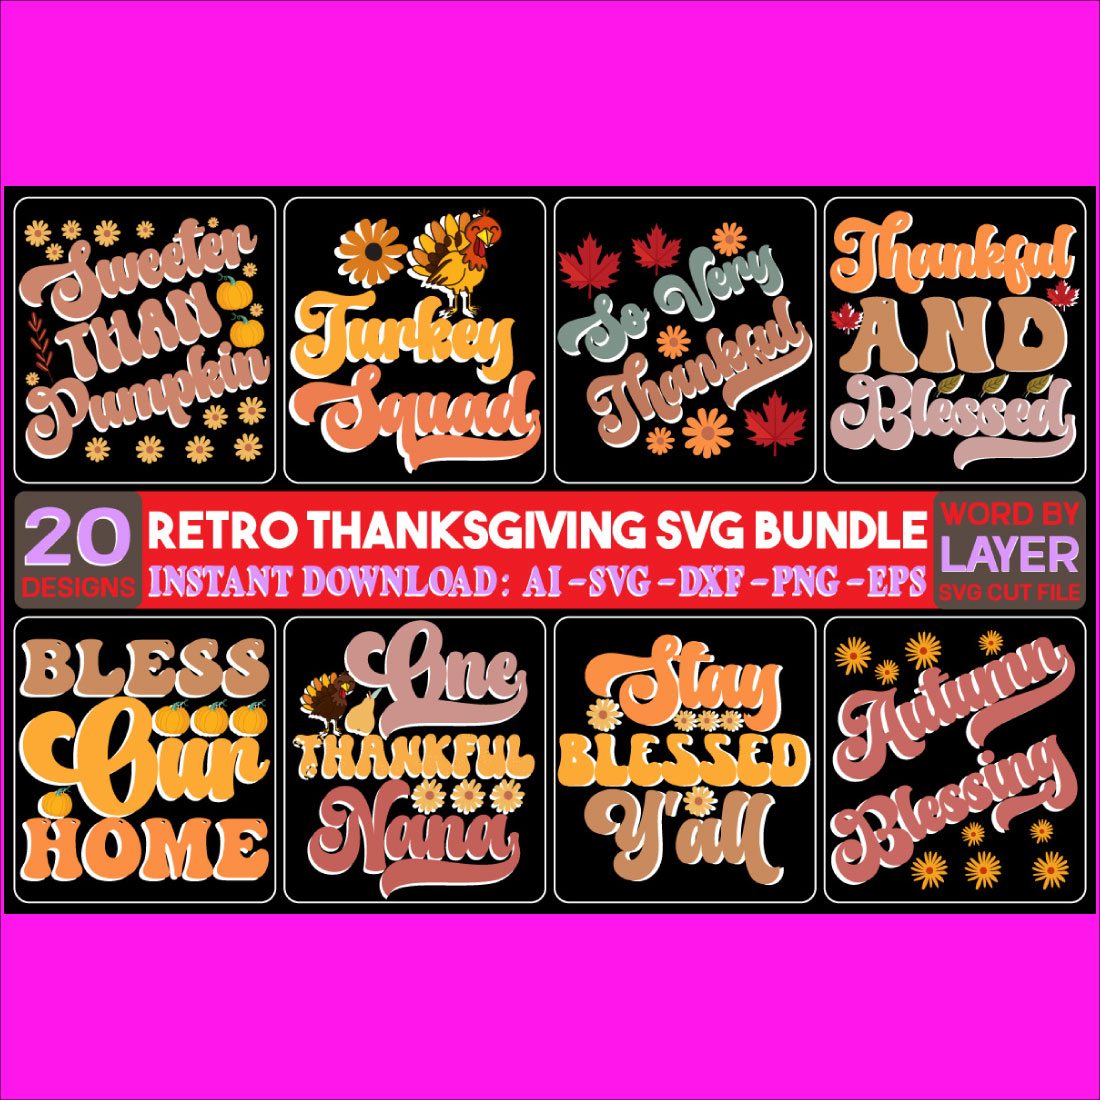 Retro Thanksgiving SVG Bundle.